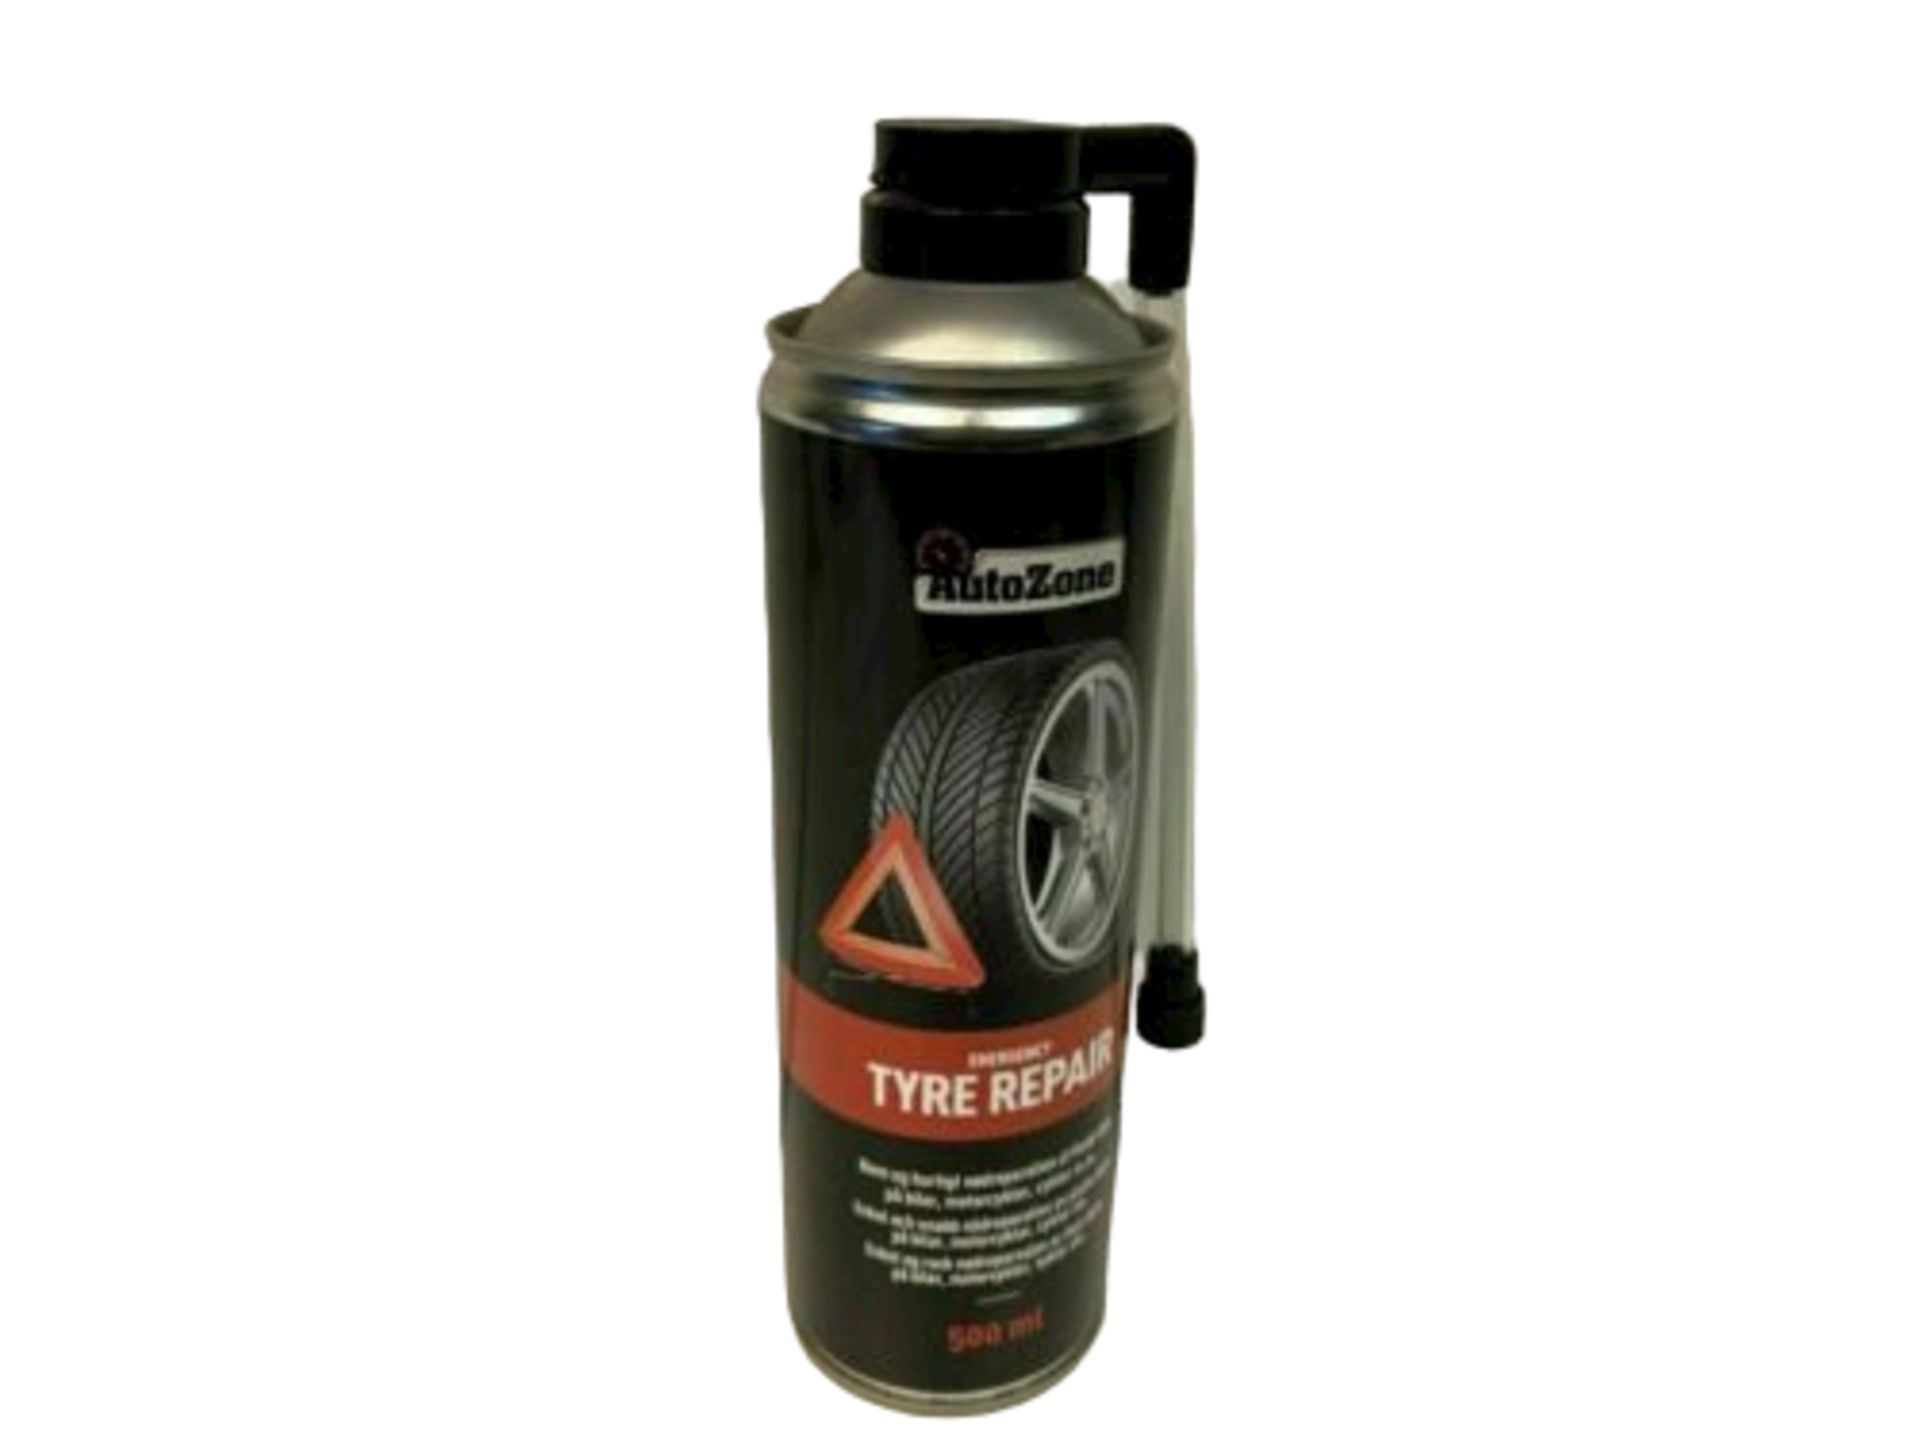 6 x Autozone Emergency Tyre Repair 500Ml - eBay 8.99Ea